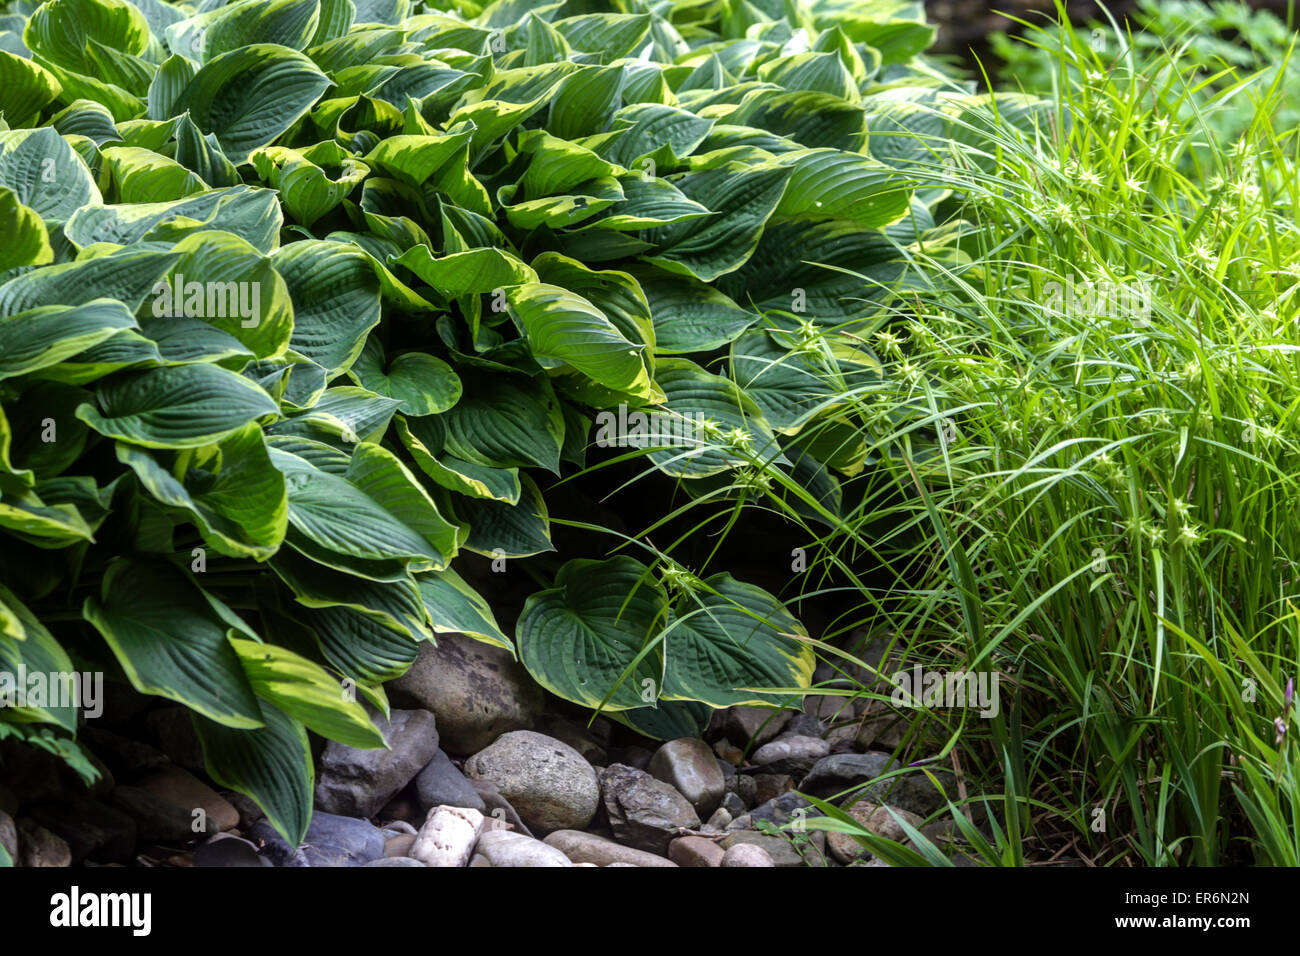 Plant with decorative and ornamental foliage - Hosta perennial plant Stock Photo